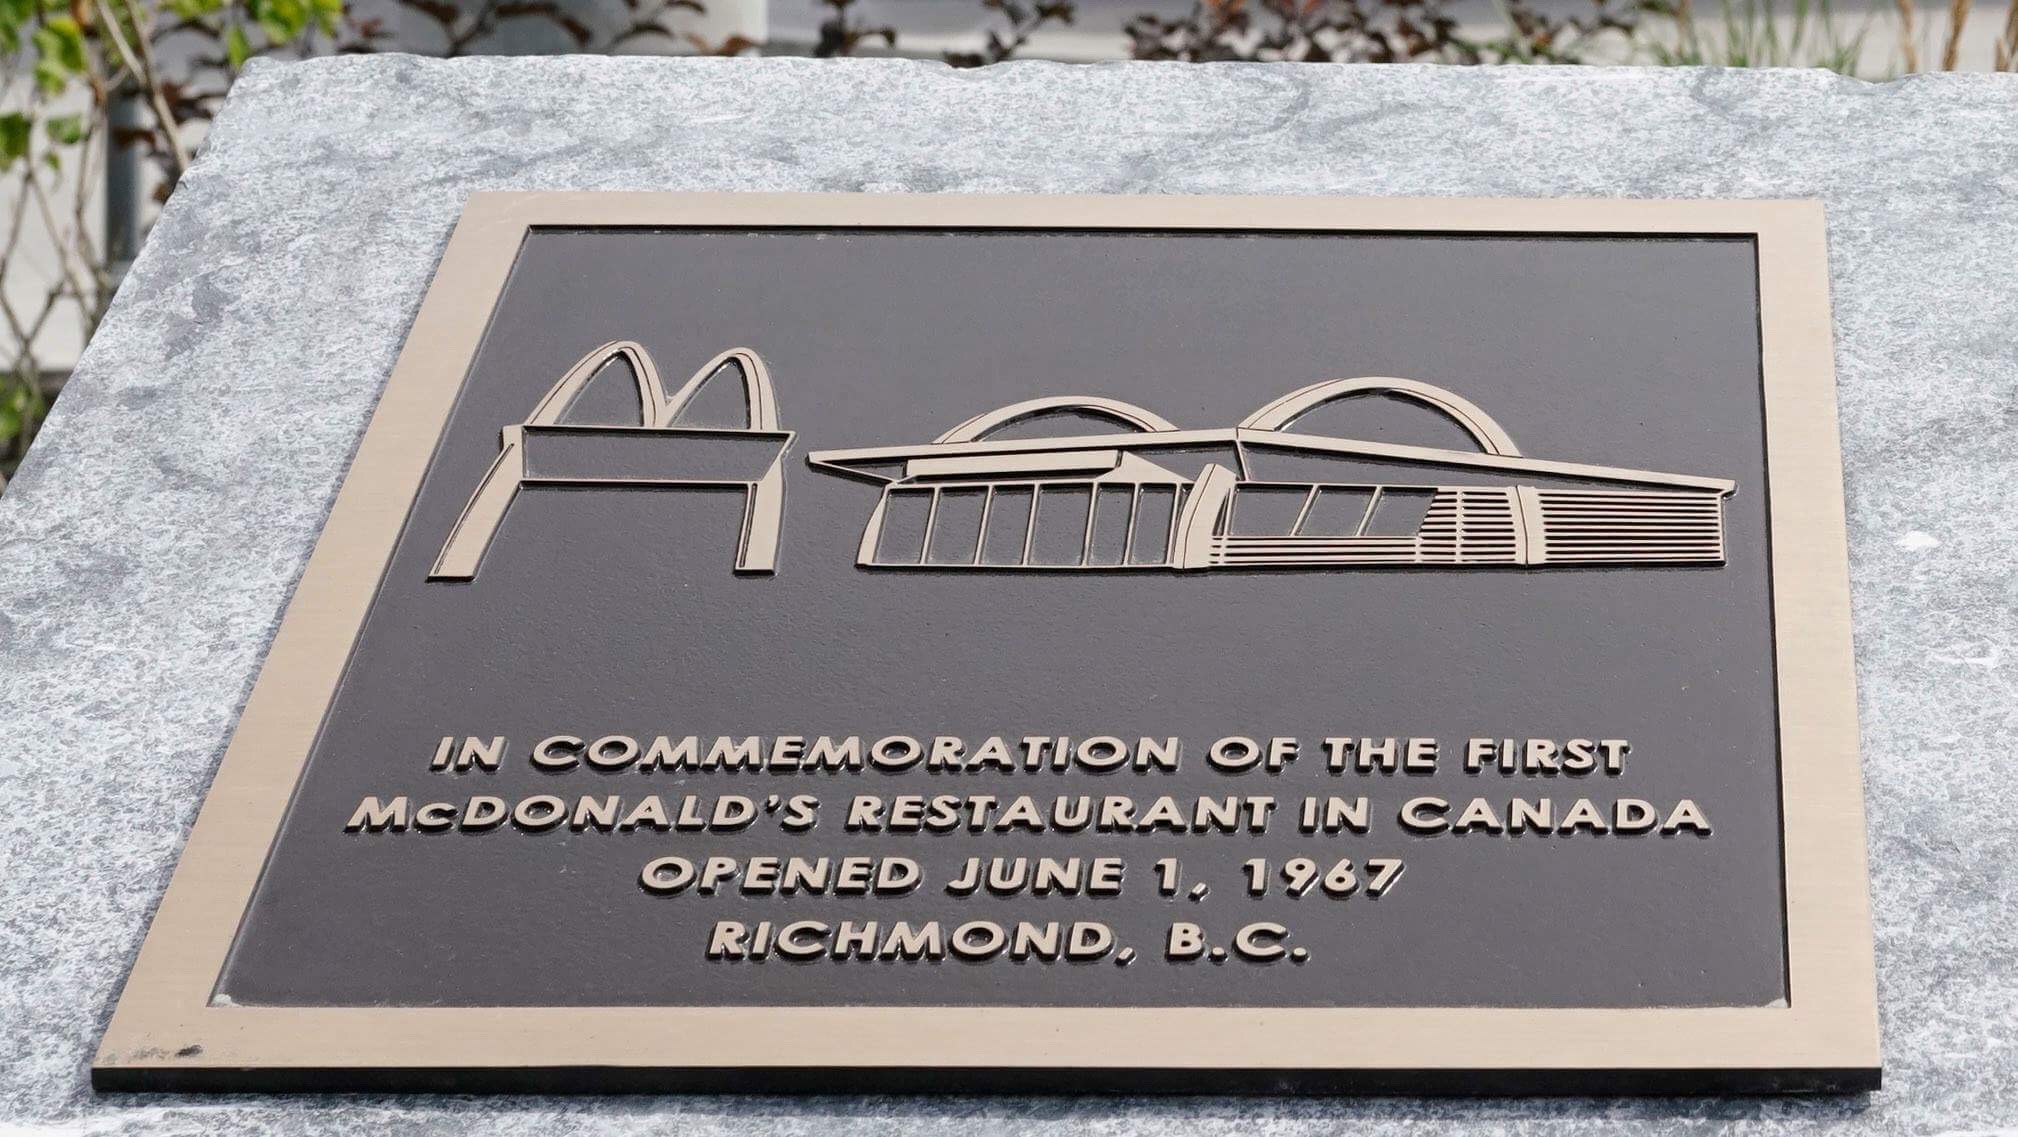 Canada’s first McDonald’s restaurant - Richmond B.C.